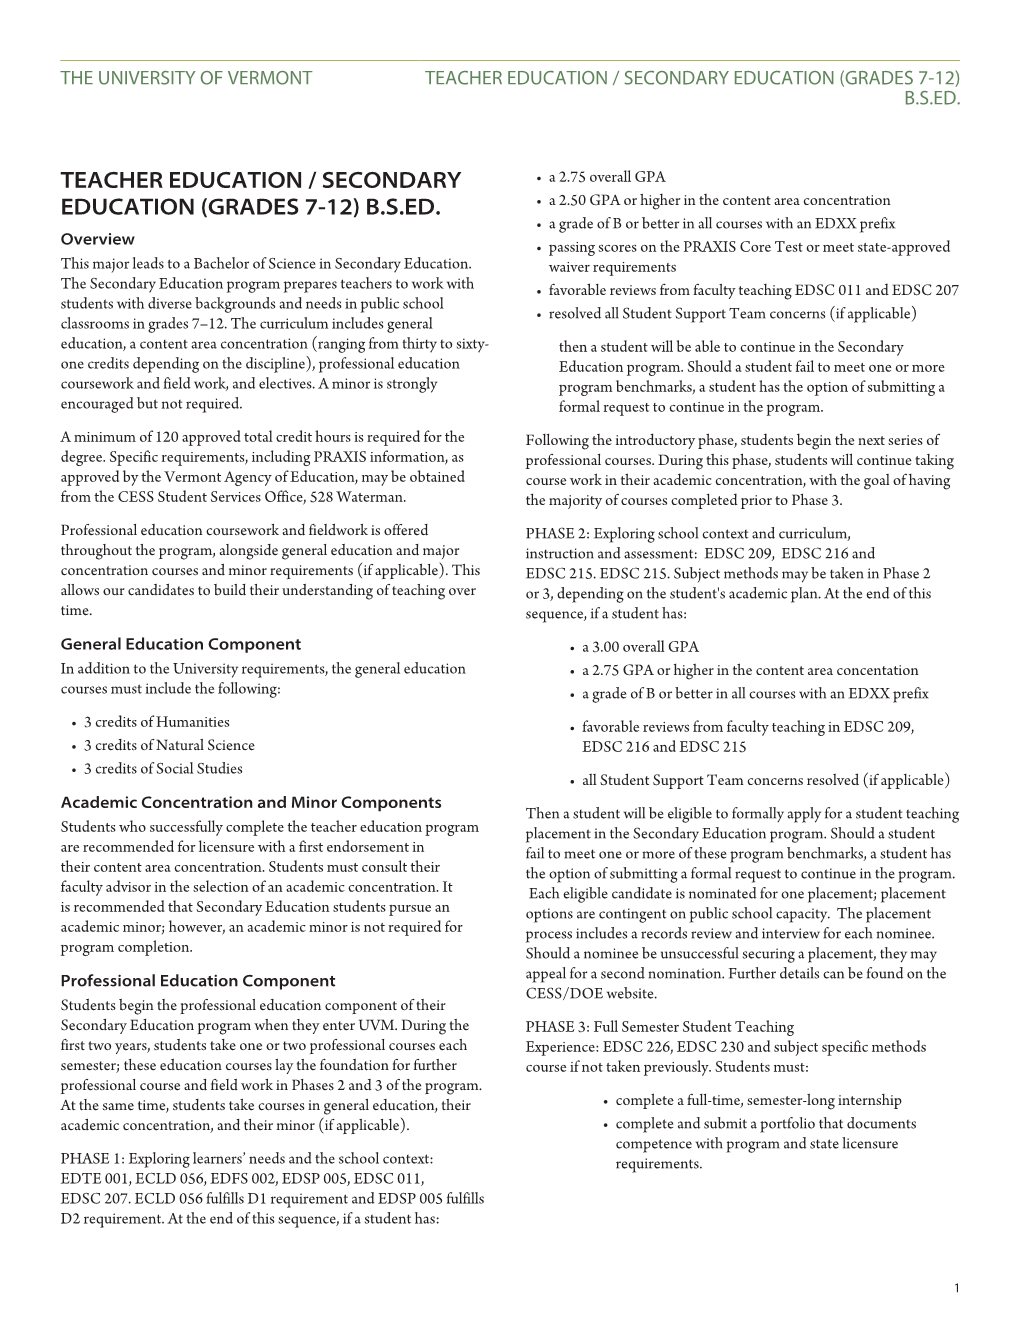 Teacher Education / Secondary Education (Grades 7-12) B.S.Ed